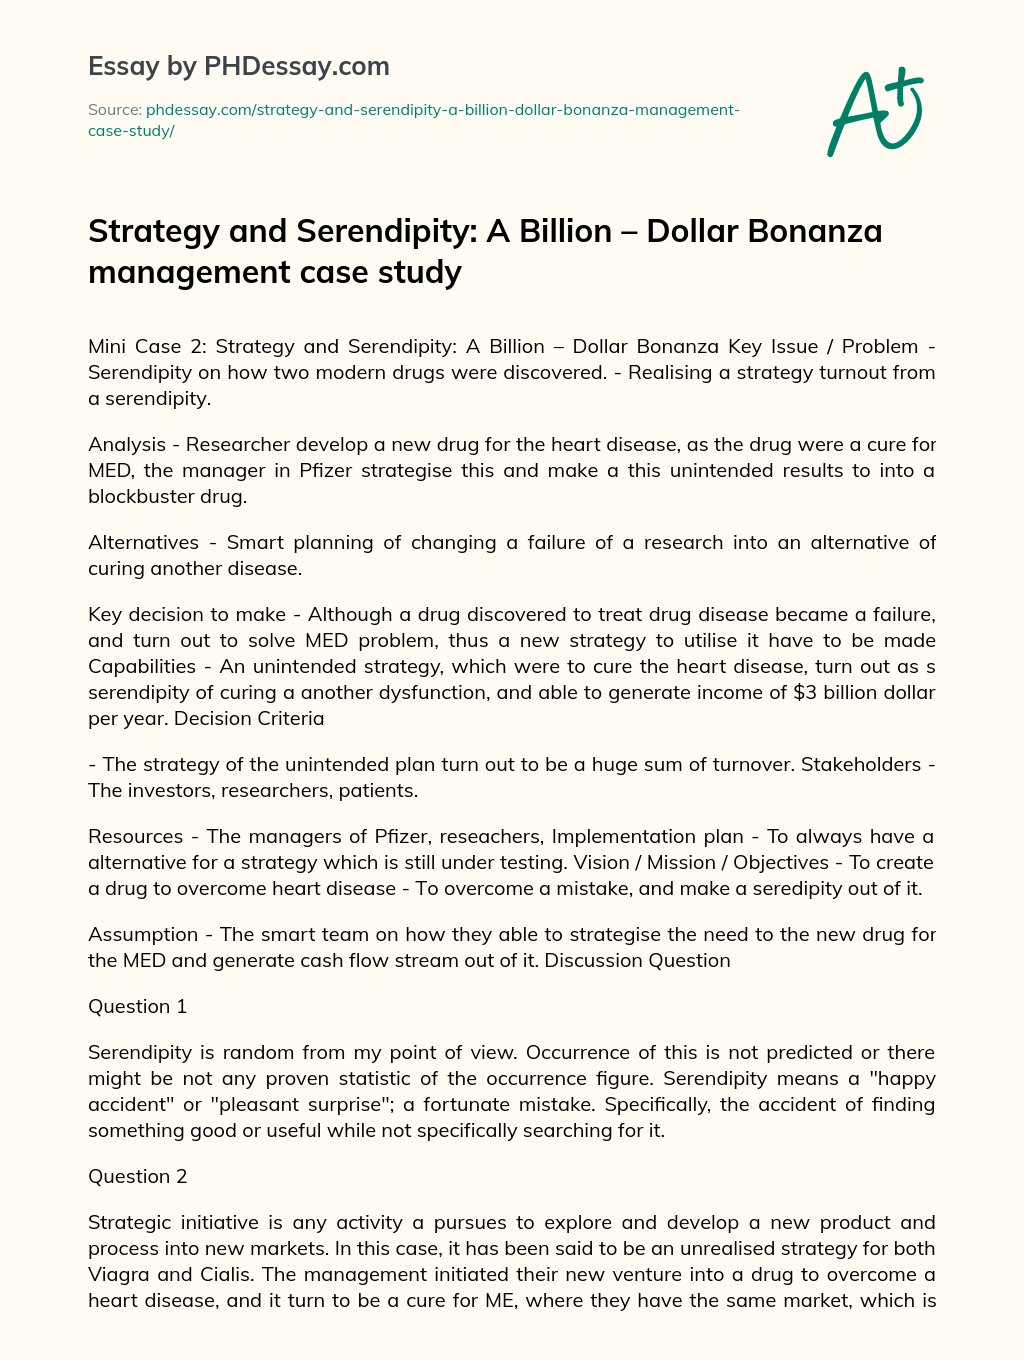 Strategy and Serendipity: A Billion – Dollar Bonanza management case study essay